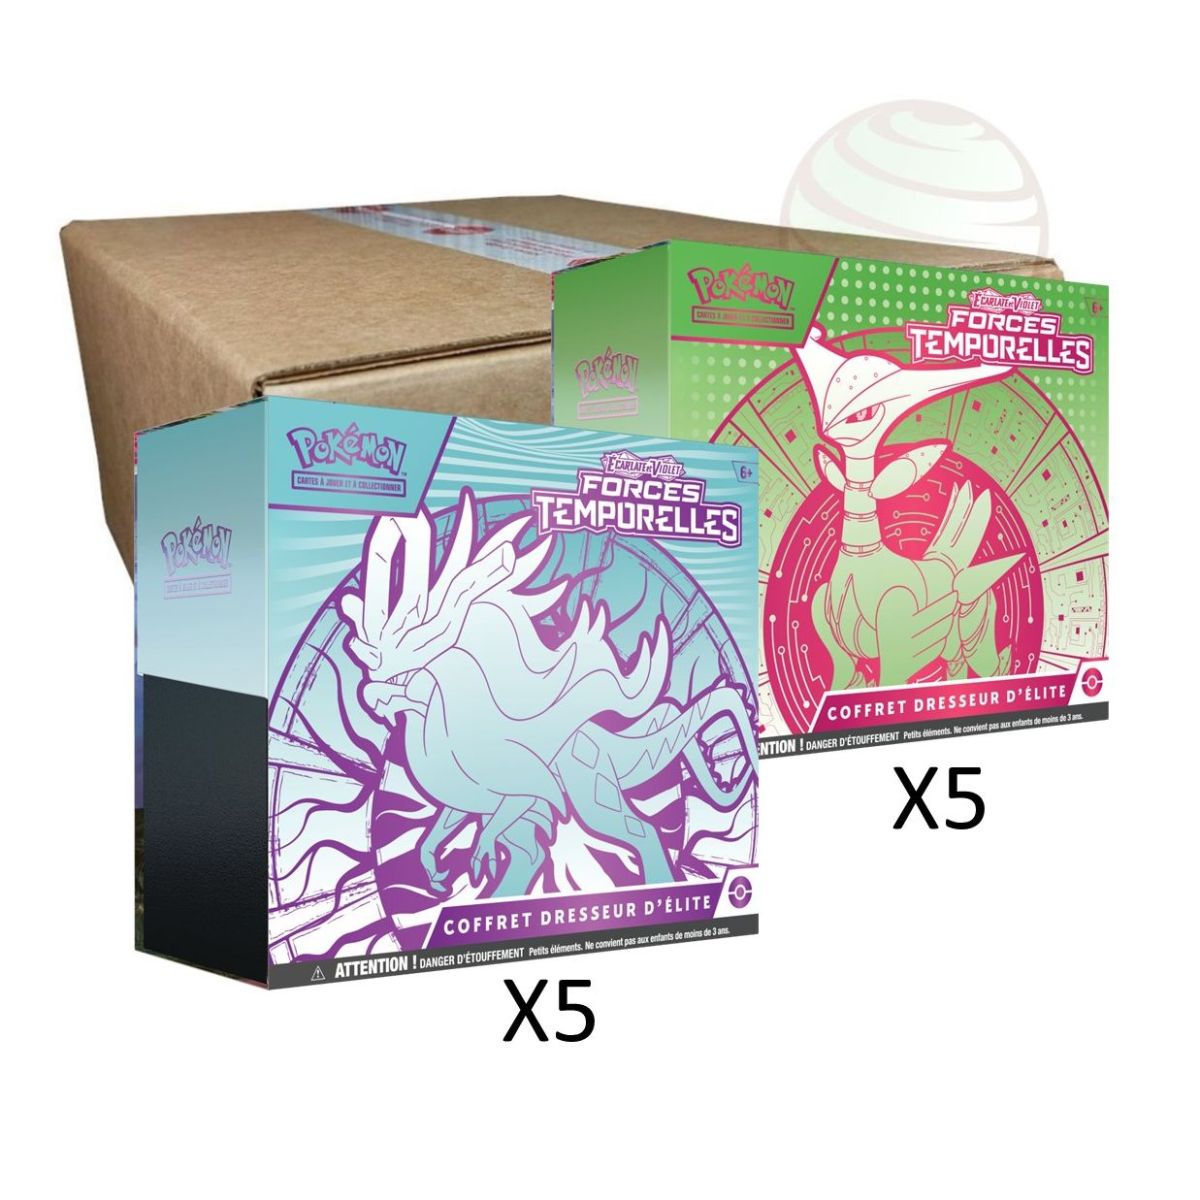 Pokémon - Box of 10 ETB Elite Trainer Boxes - Scarlet and Purple - Temporal Forces - [SV05 - EV05] - FR